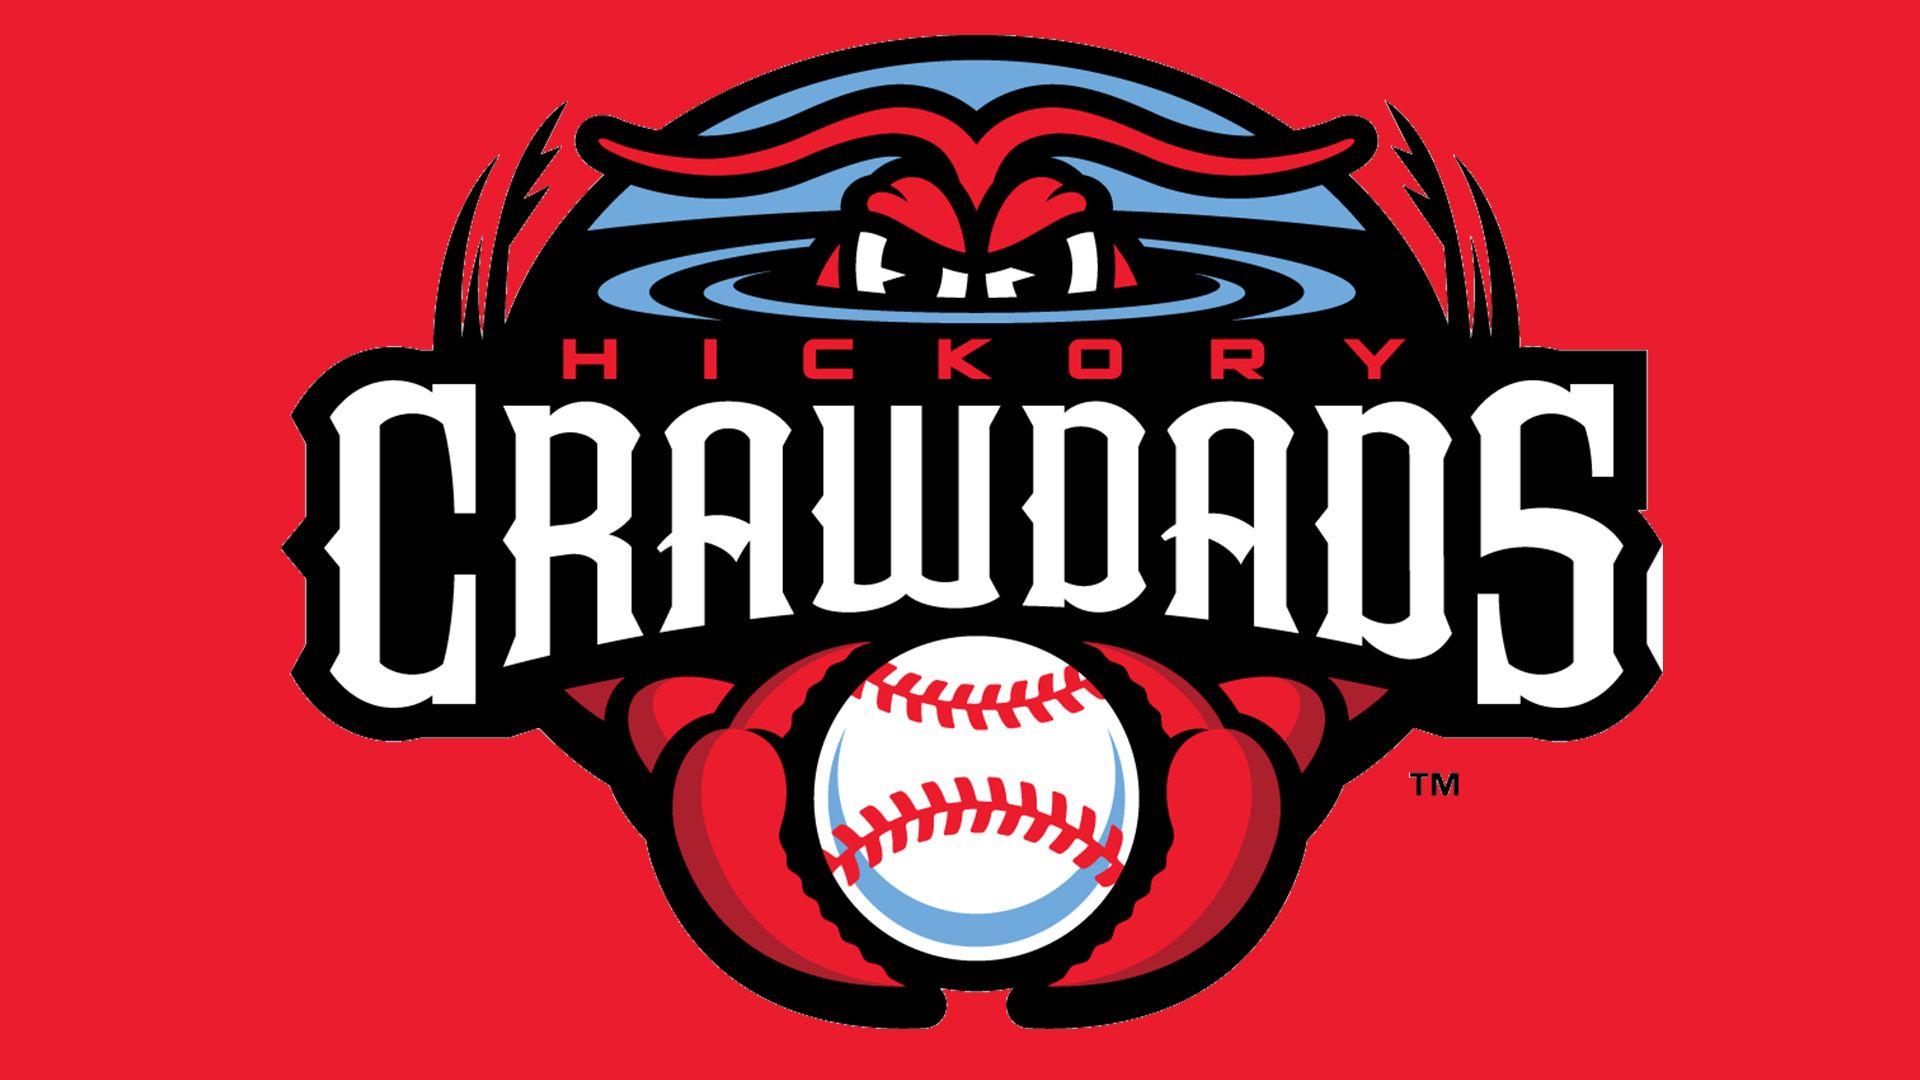 Crawdad Logo - Hickory Crawdads logo, symbol, meaning, History and Evolution